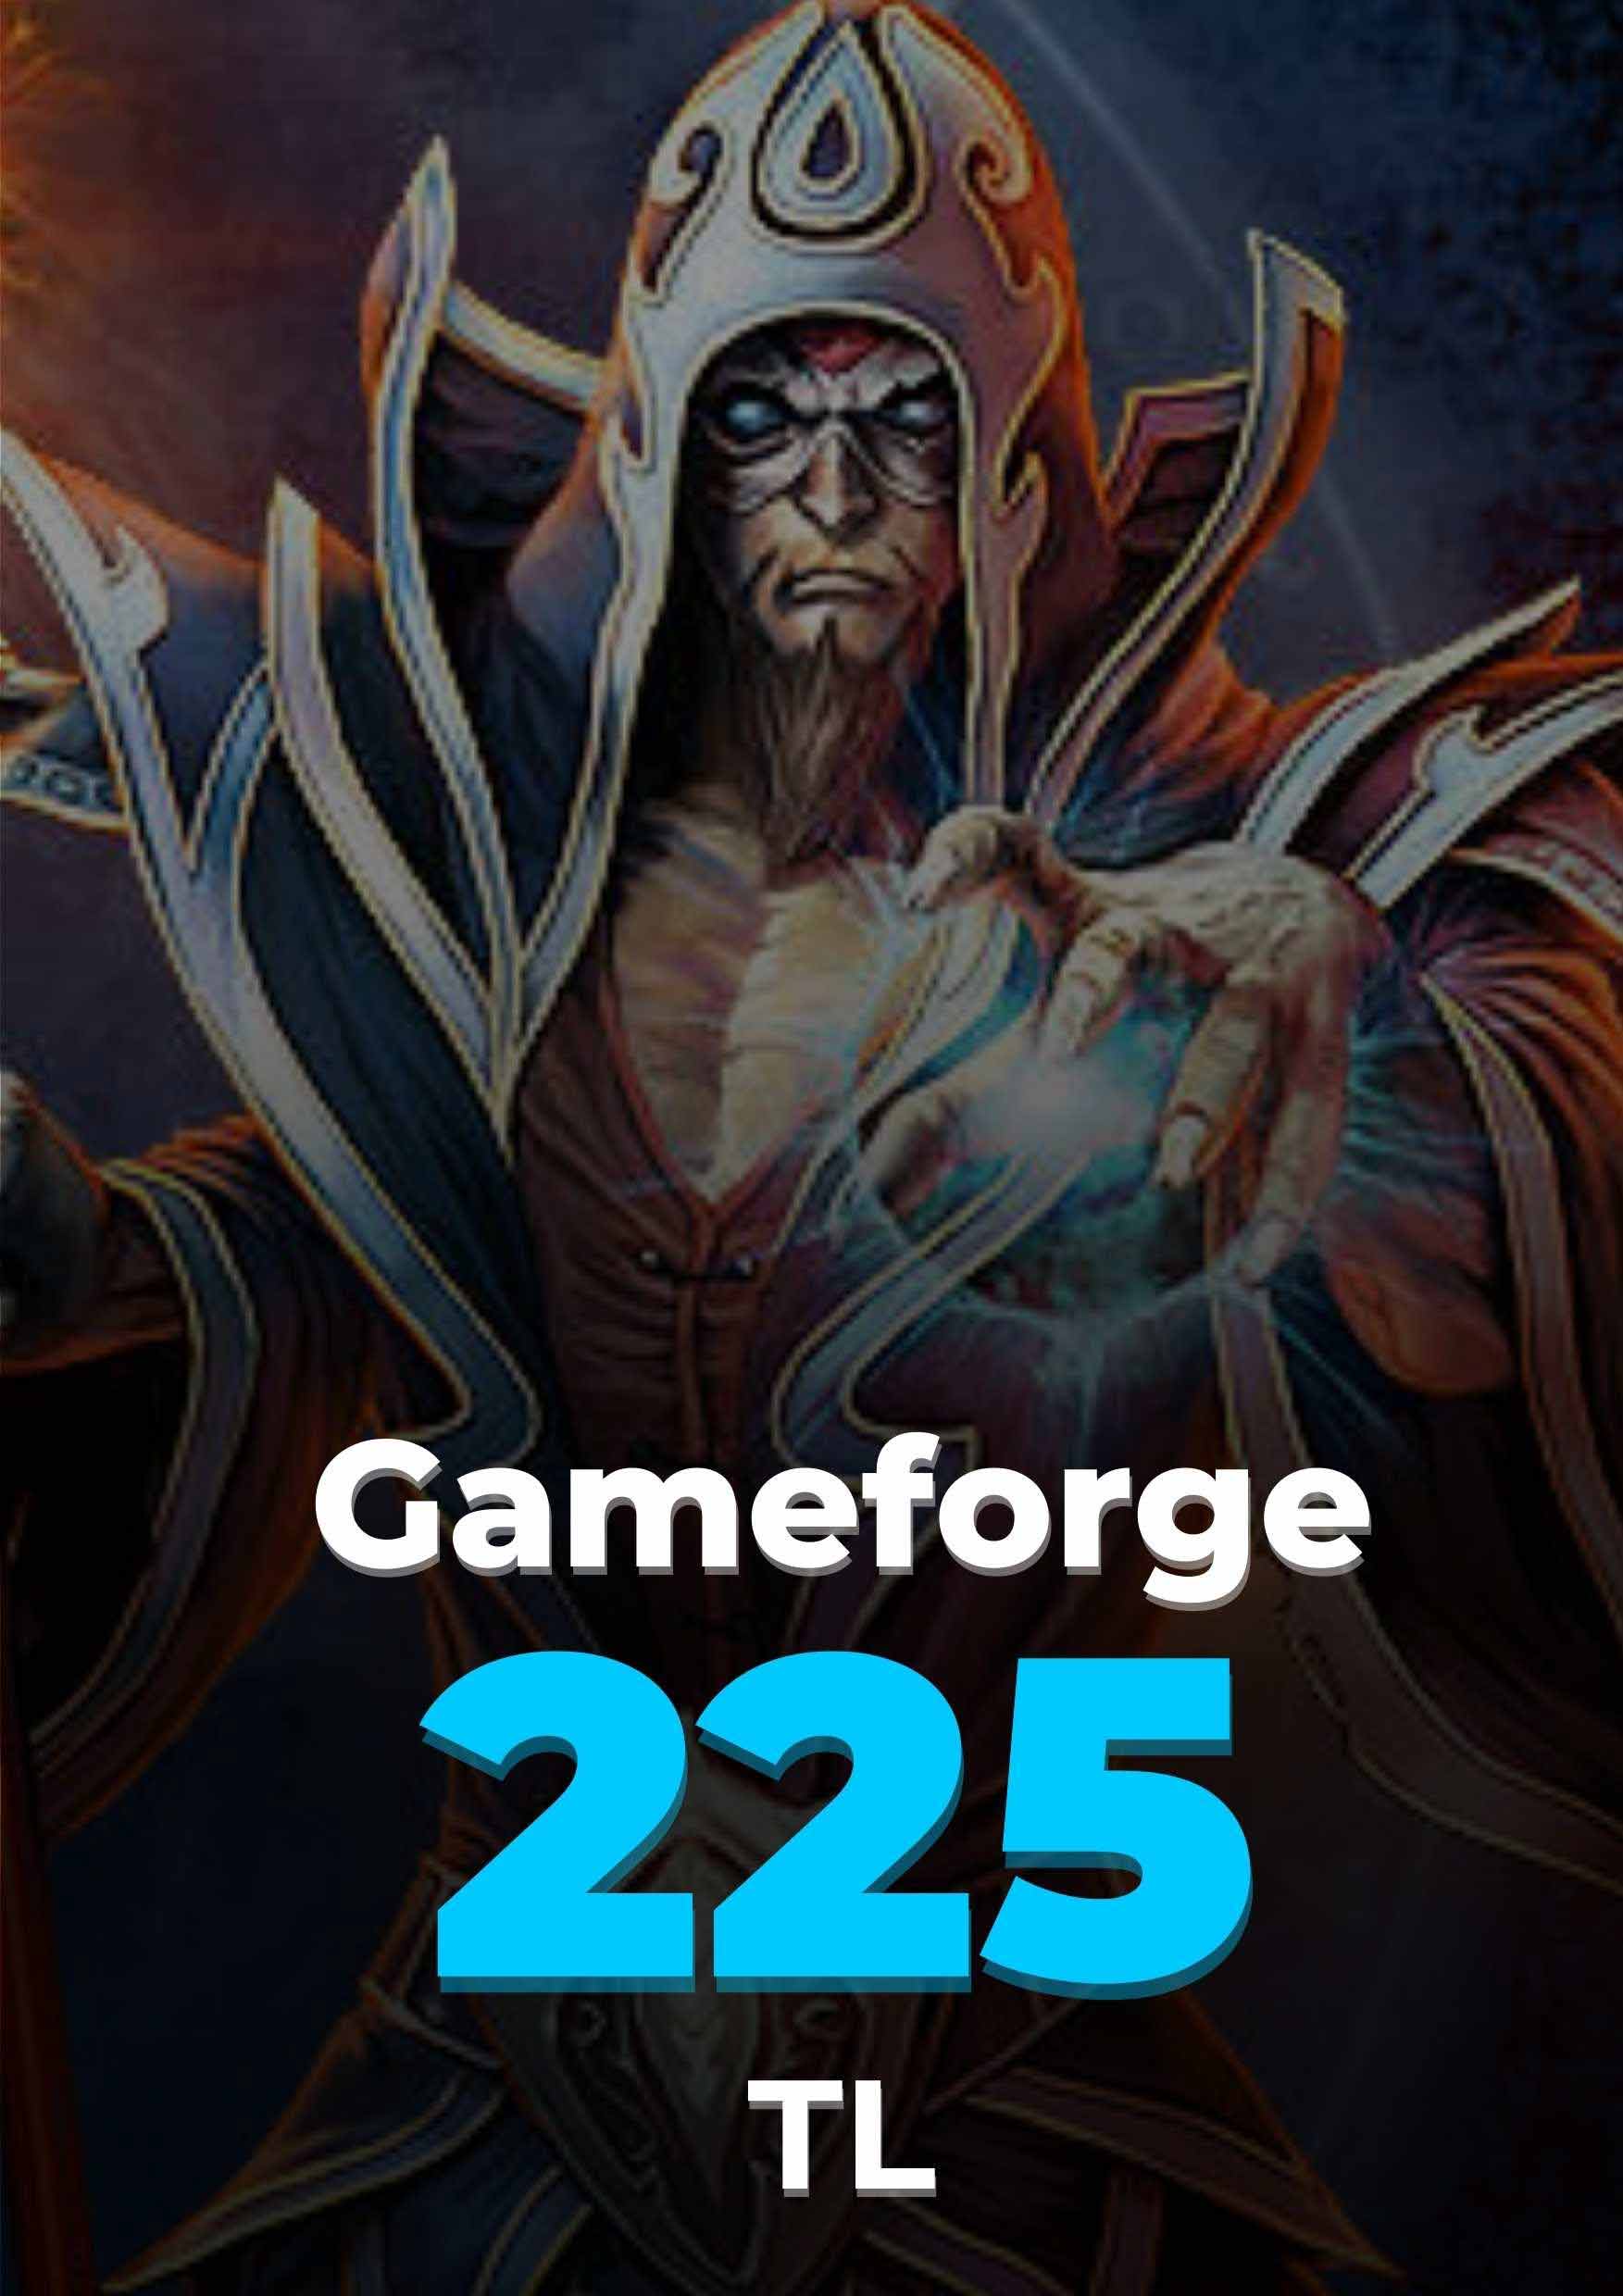 Gameforge 225 TRY